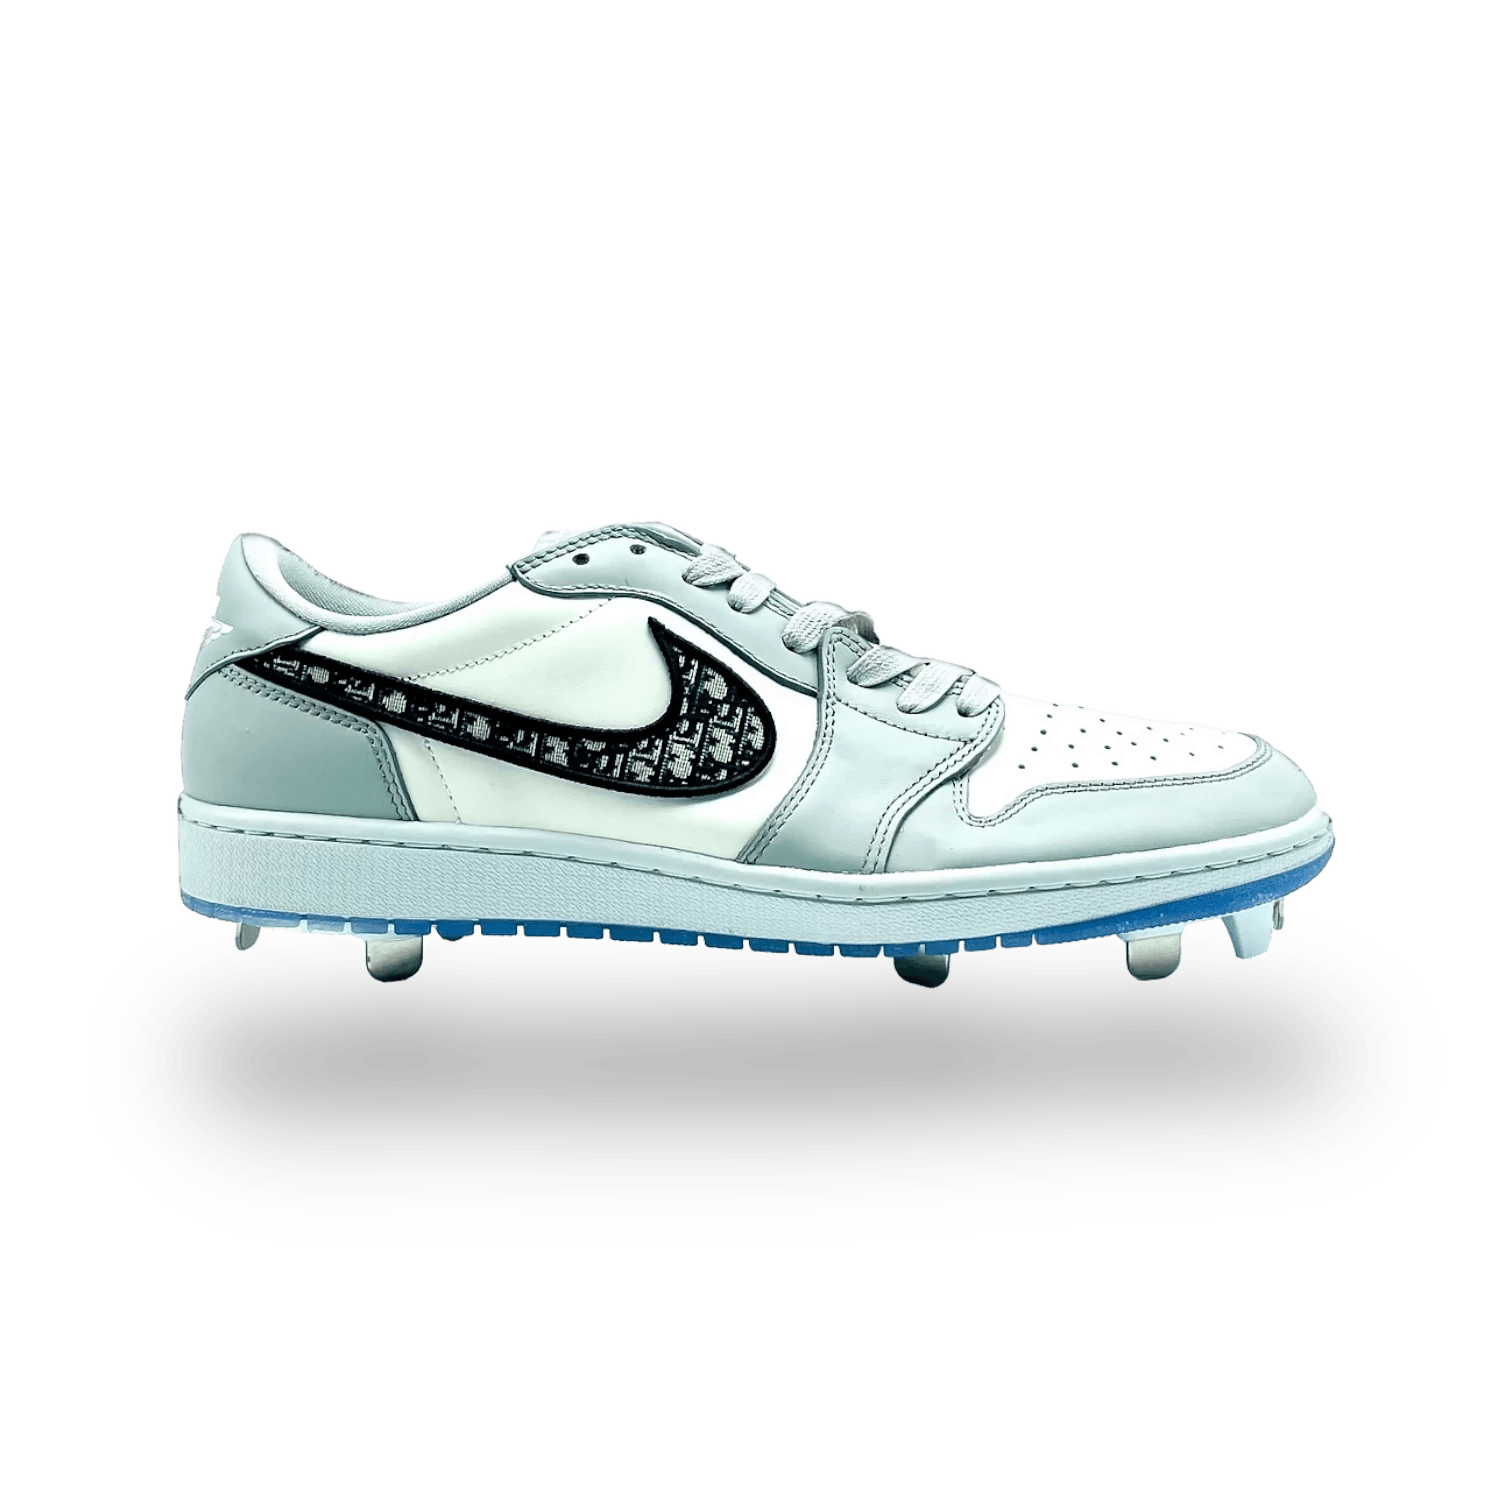 Jordan Baseball and Softball Shoes & Cleats for sale